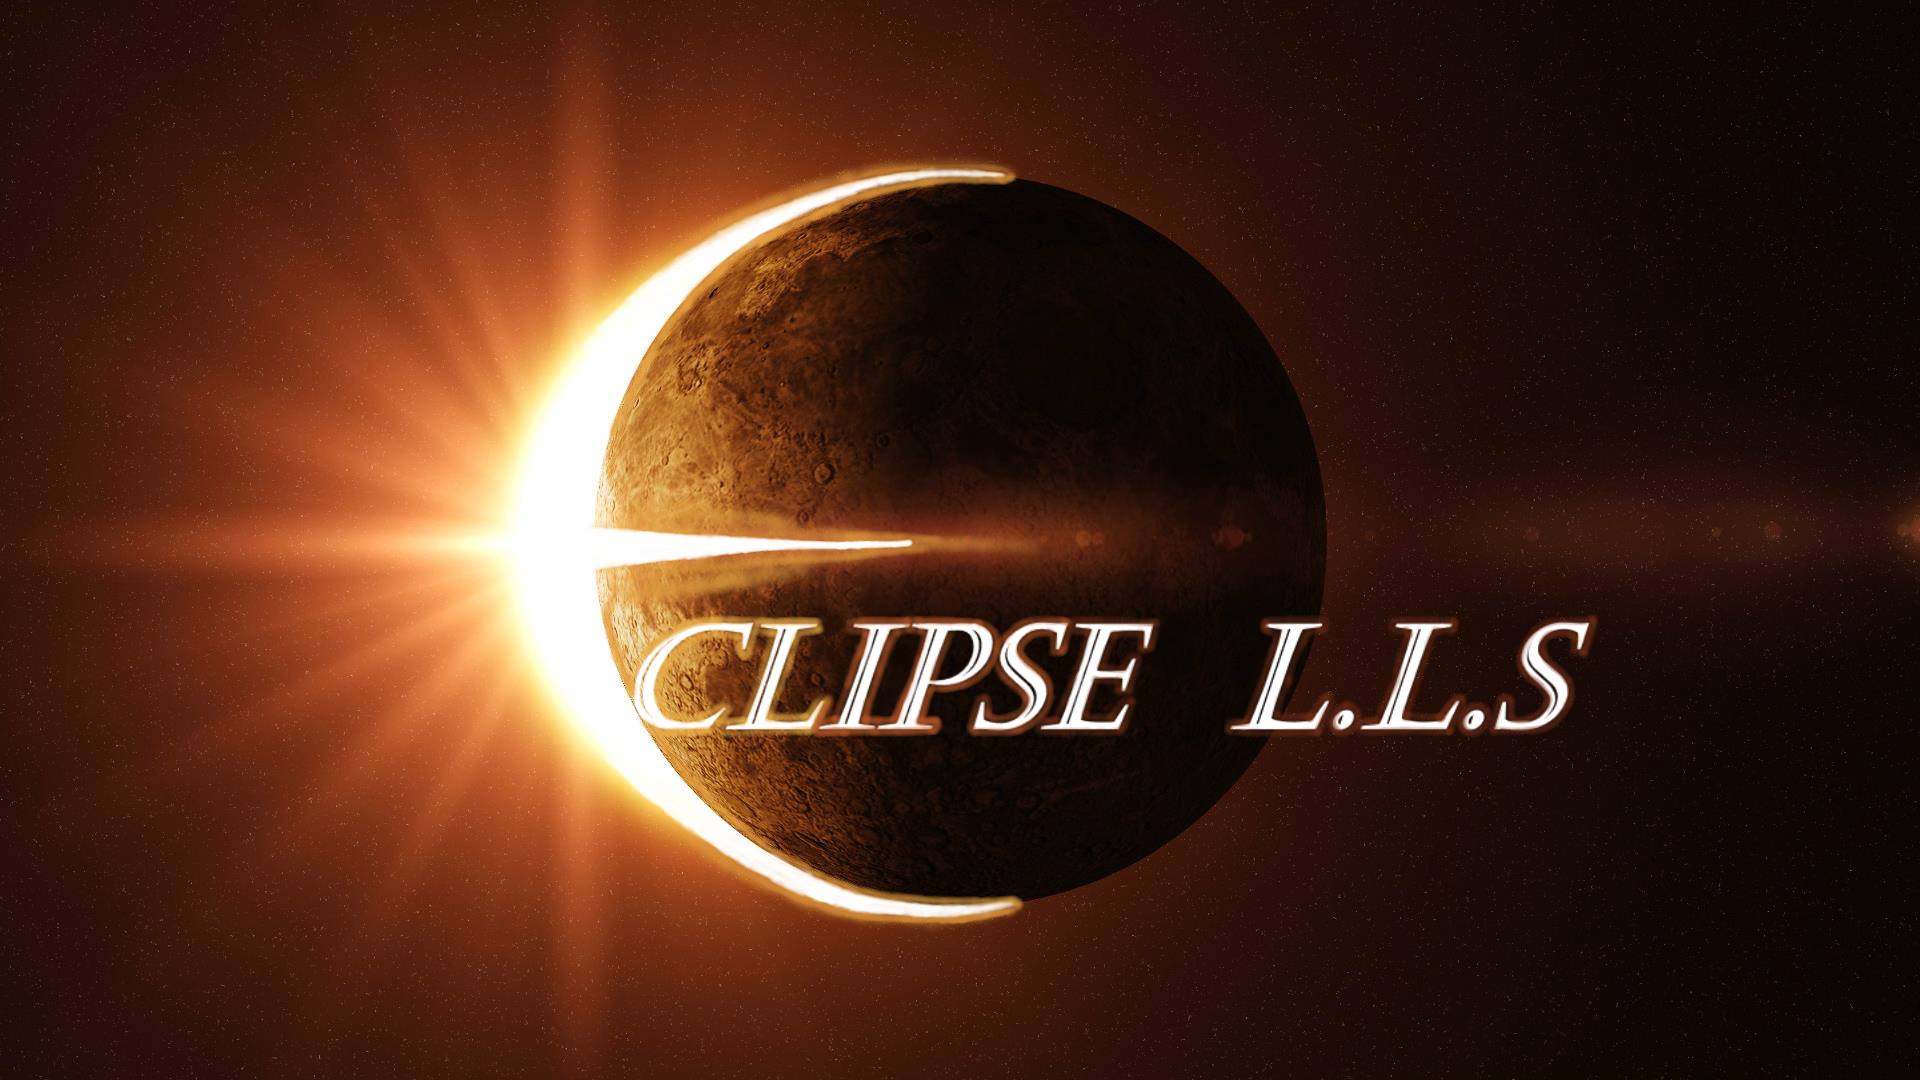 Eclipse LLS - Lawn Care, Landscape, Snow Removal